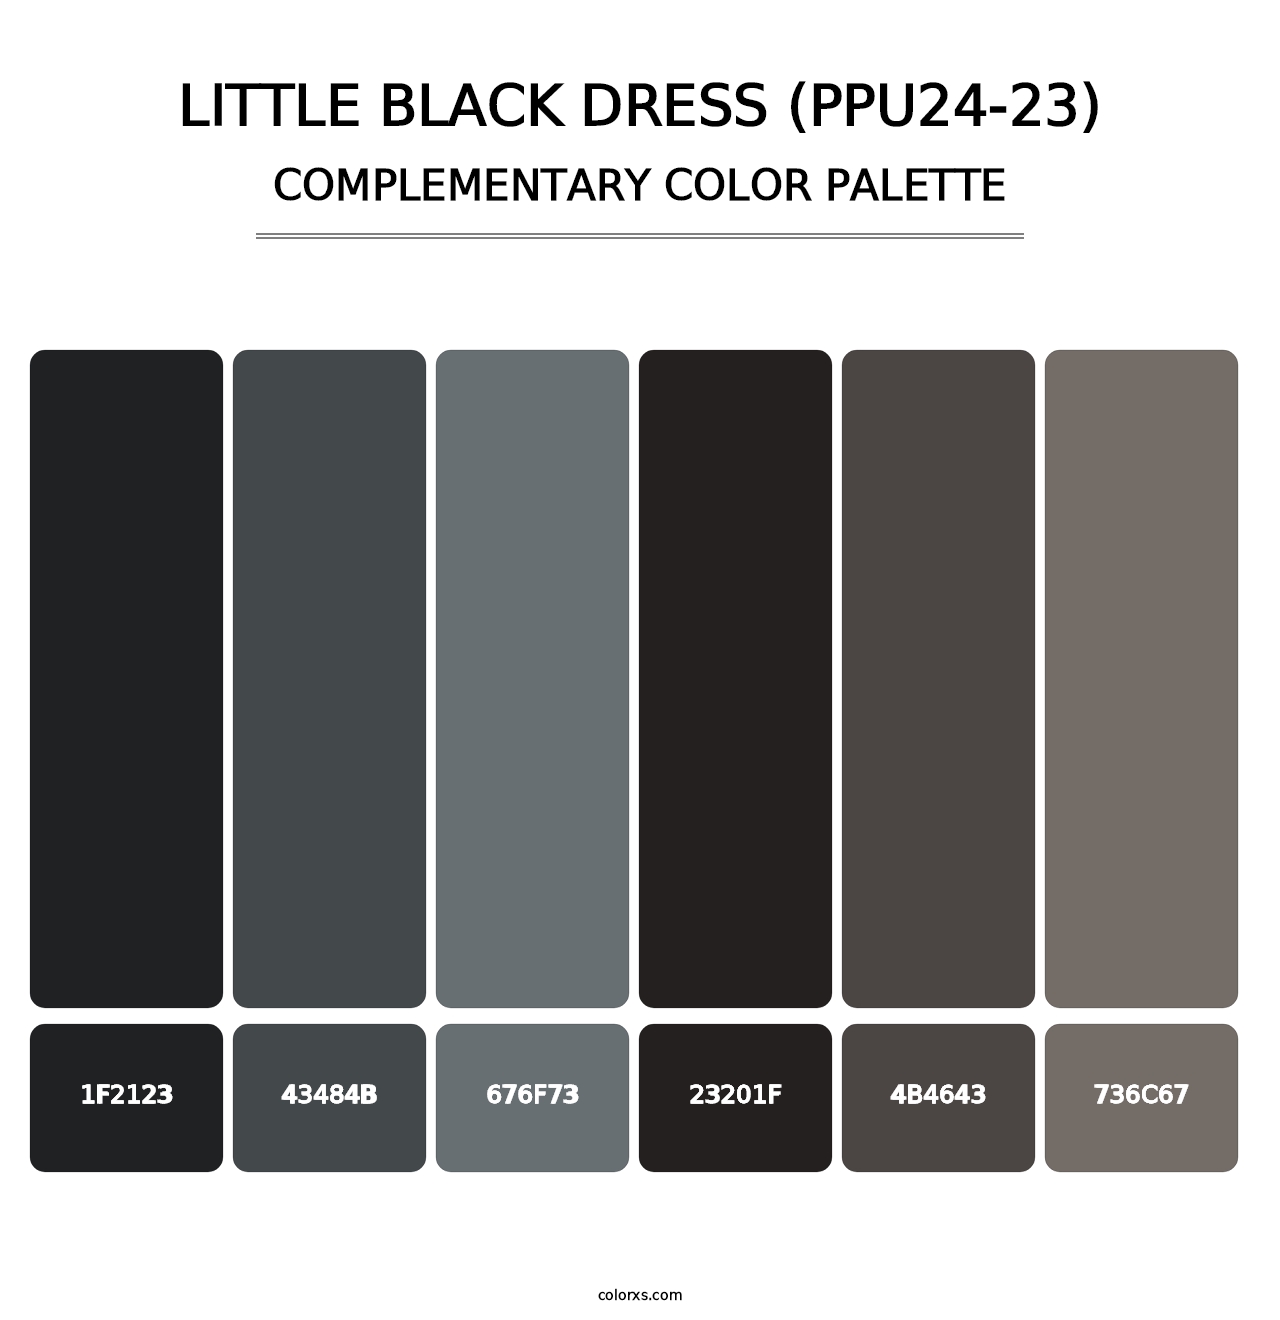 Little Black Dress (PPU24-23) - Complementary Color Palette